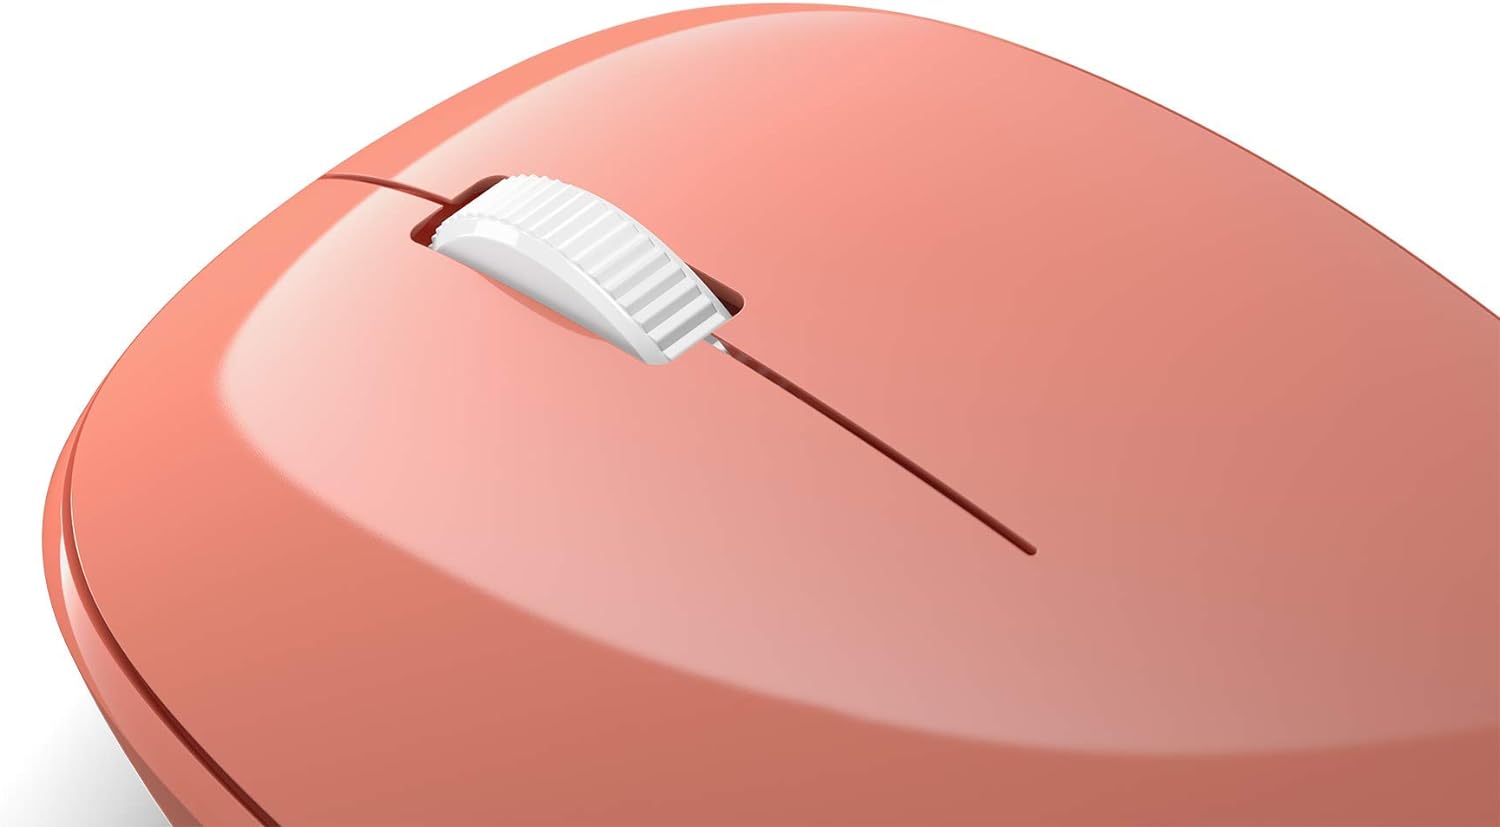 Microsoft RJN-00038 Bluetooth Mouse - Peach - New